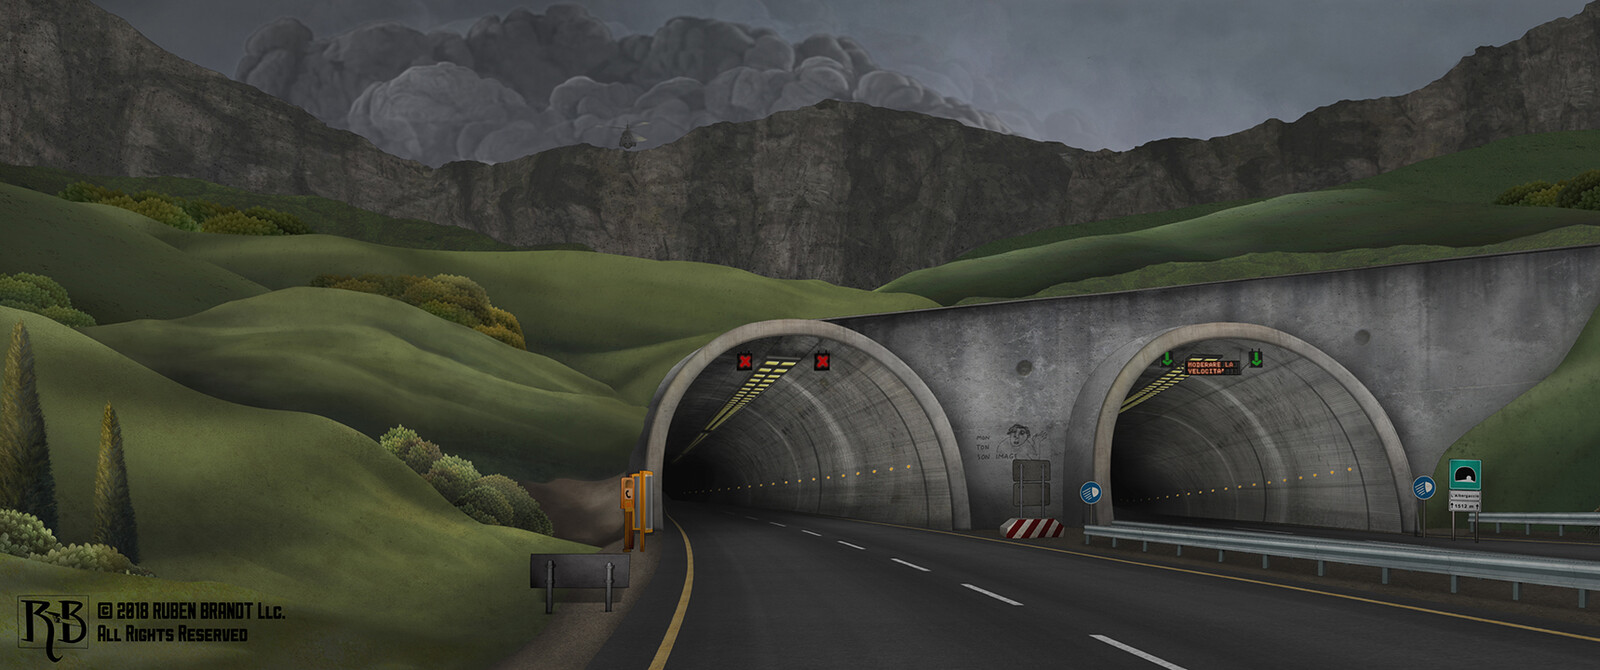 My task: landscape, tunnels without smoke